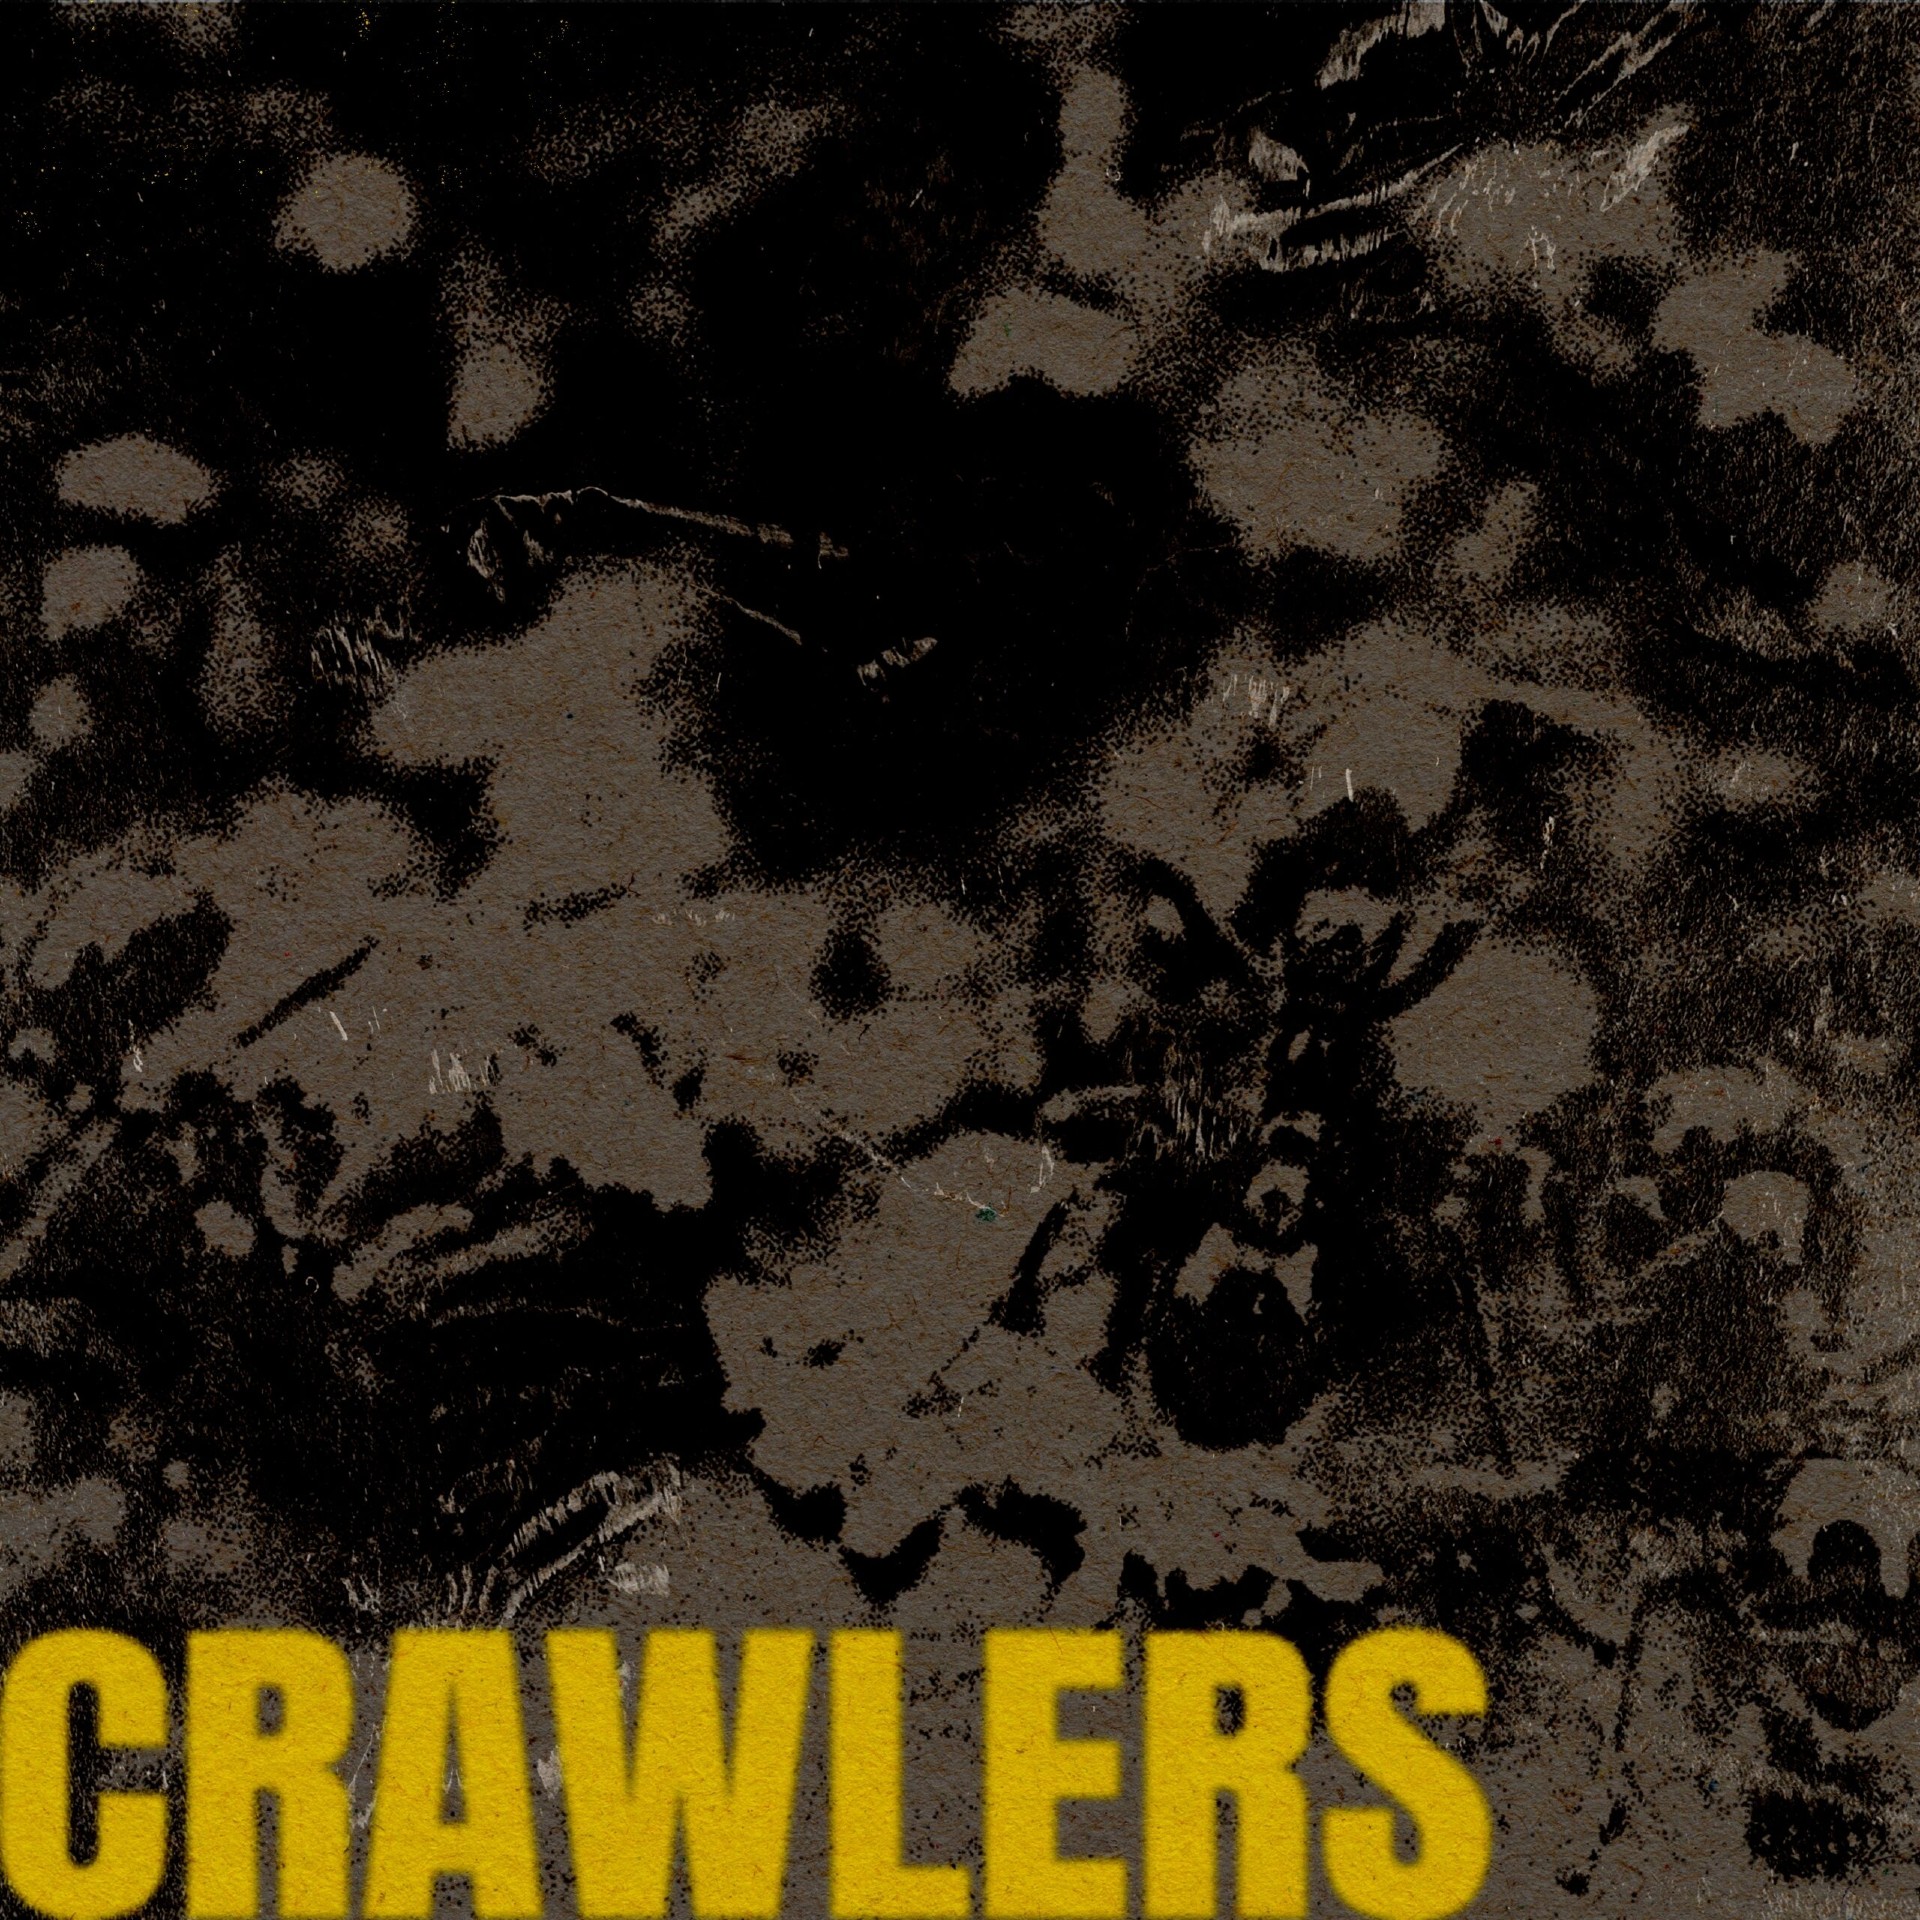 Family Man “CRAWLERS” single artwork